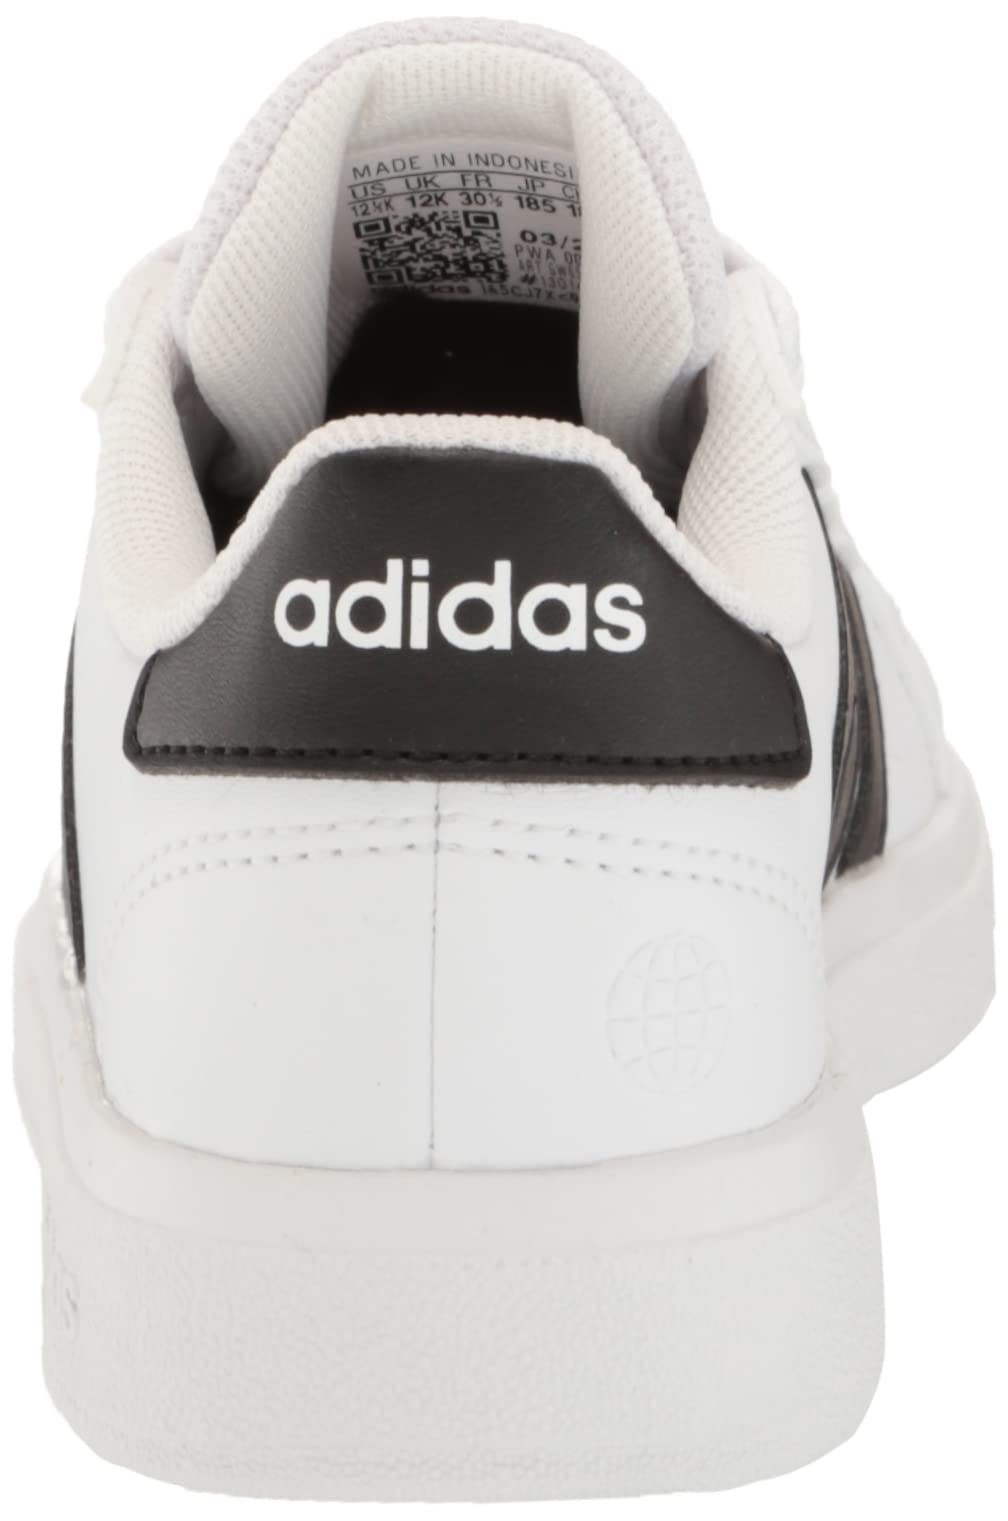 adidas Grand Court 2.0 (Little Kid/Big Kid) White/Core Black/Core Black 3 Little Kid M